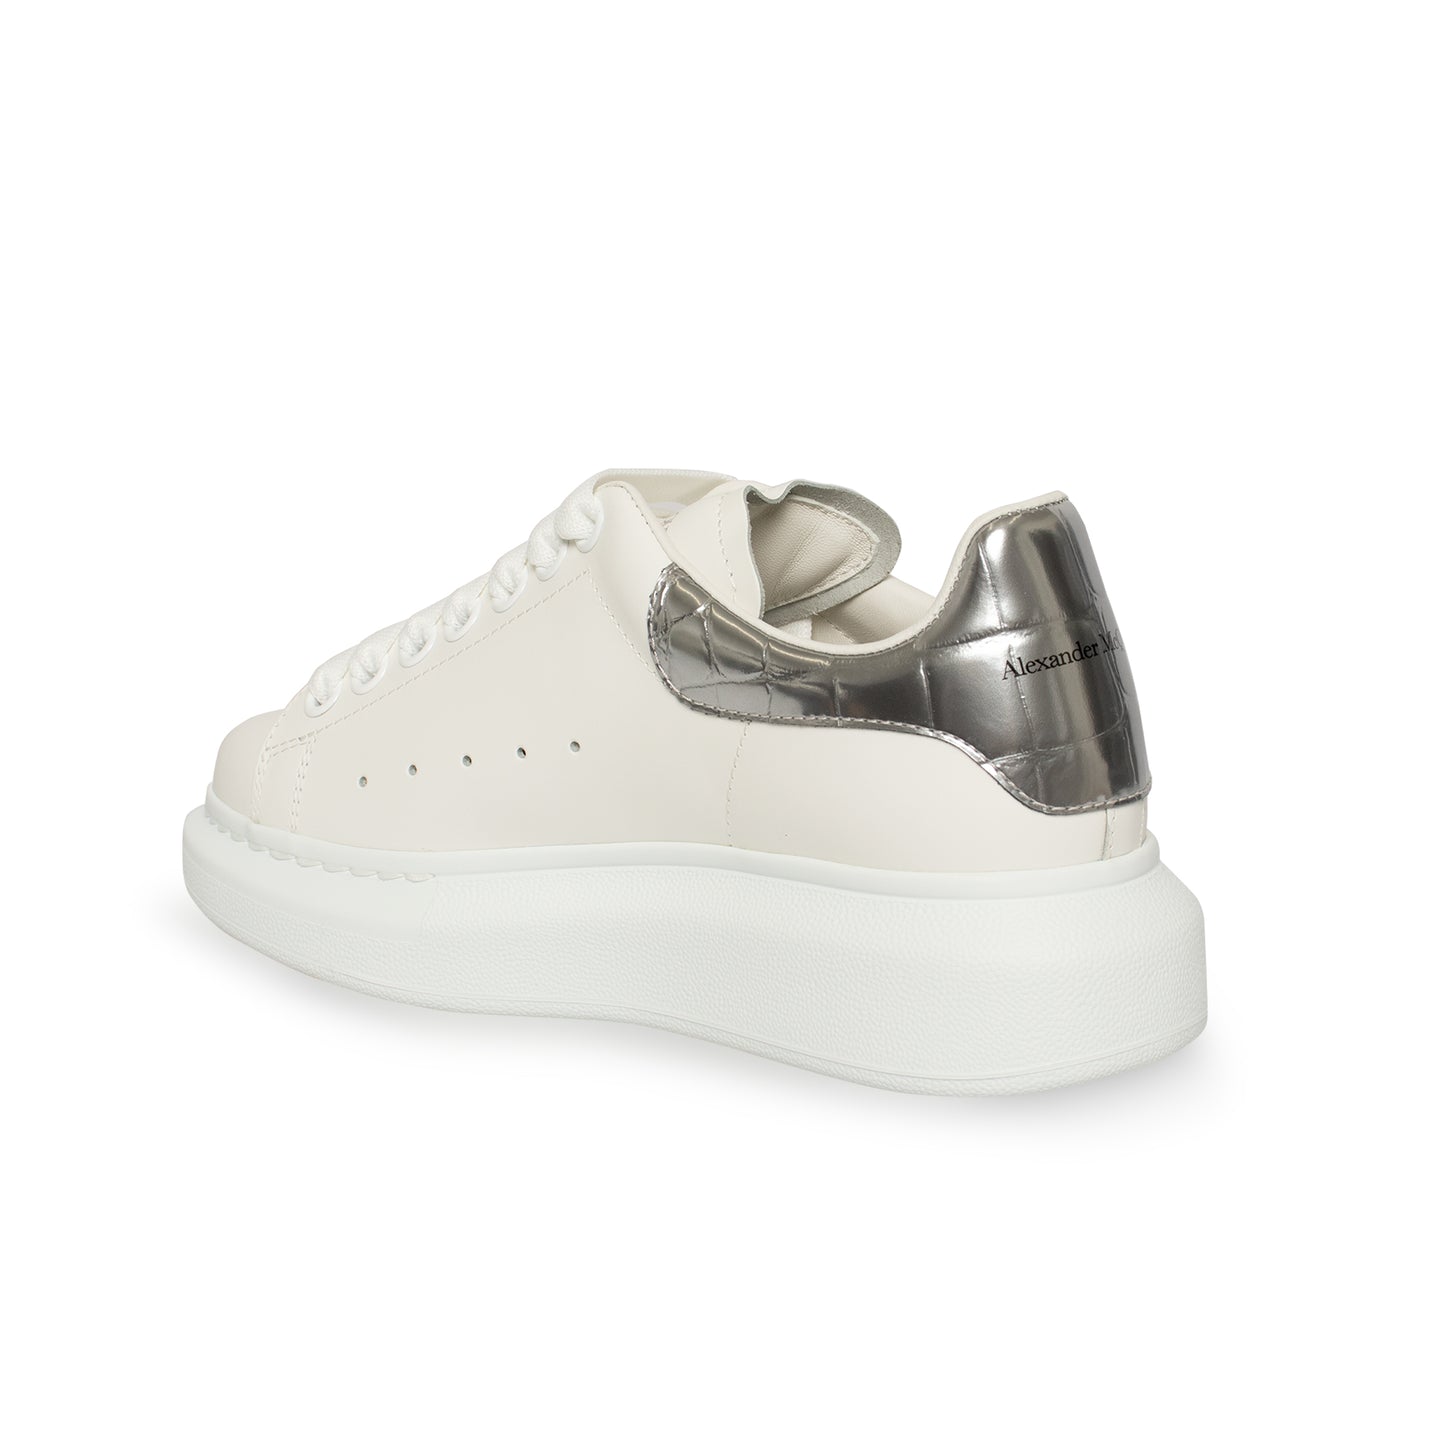 Larry Croco Metallic Heel Sneakers in White/Silver